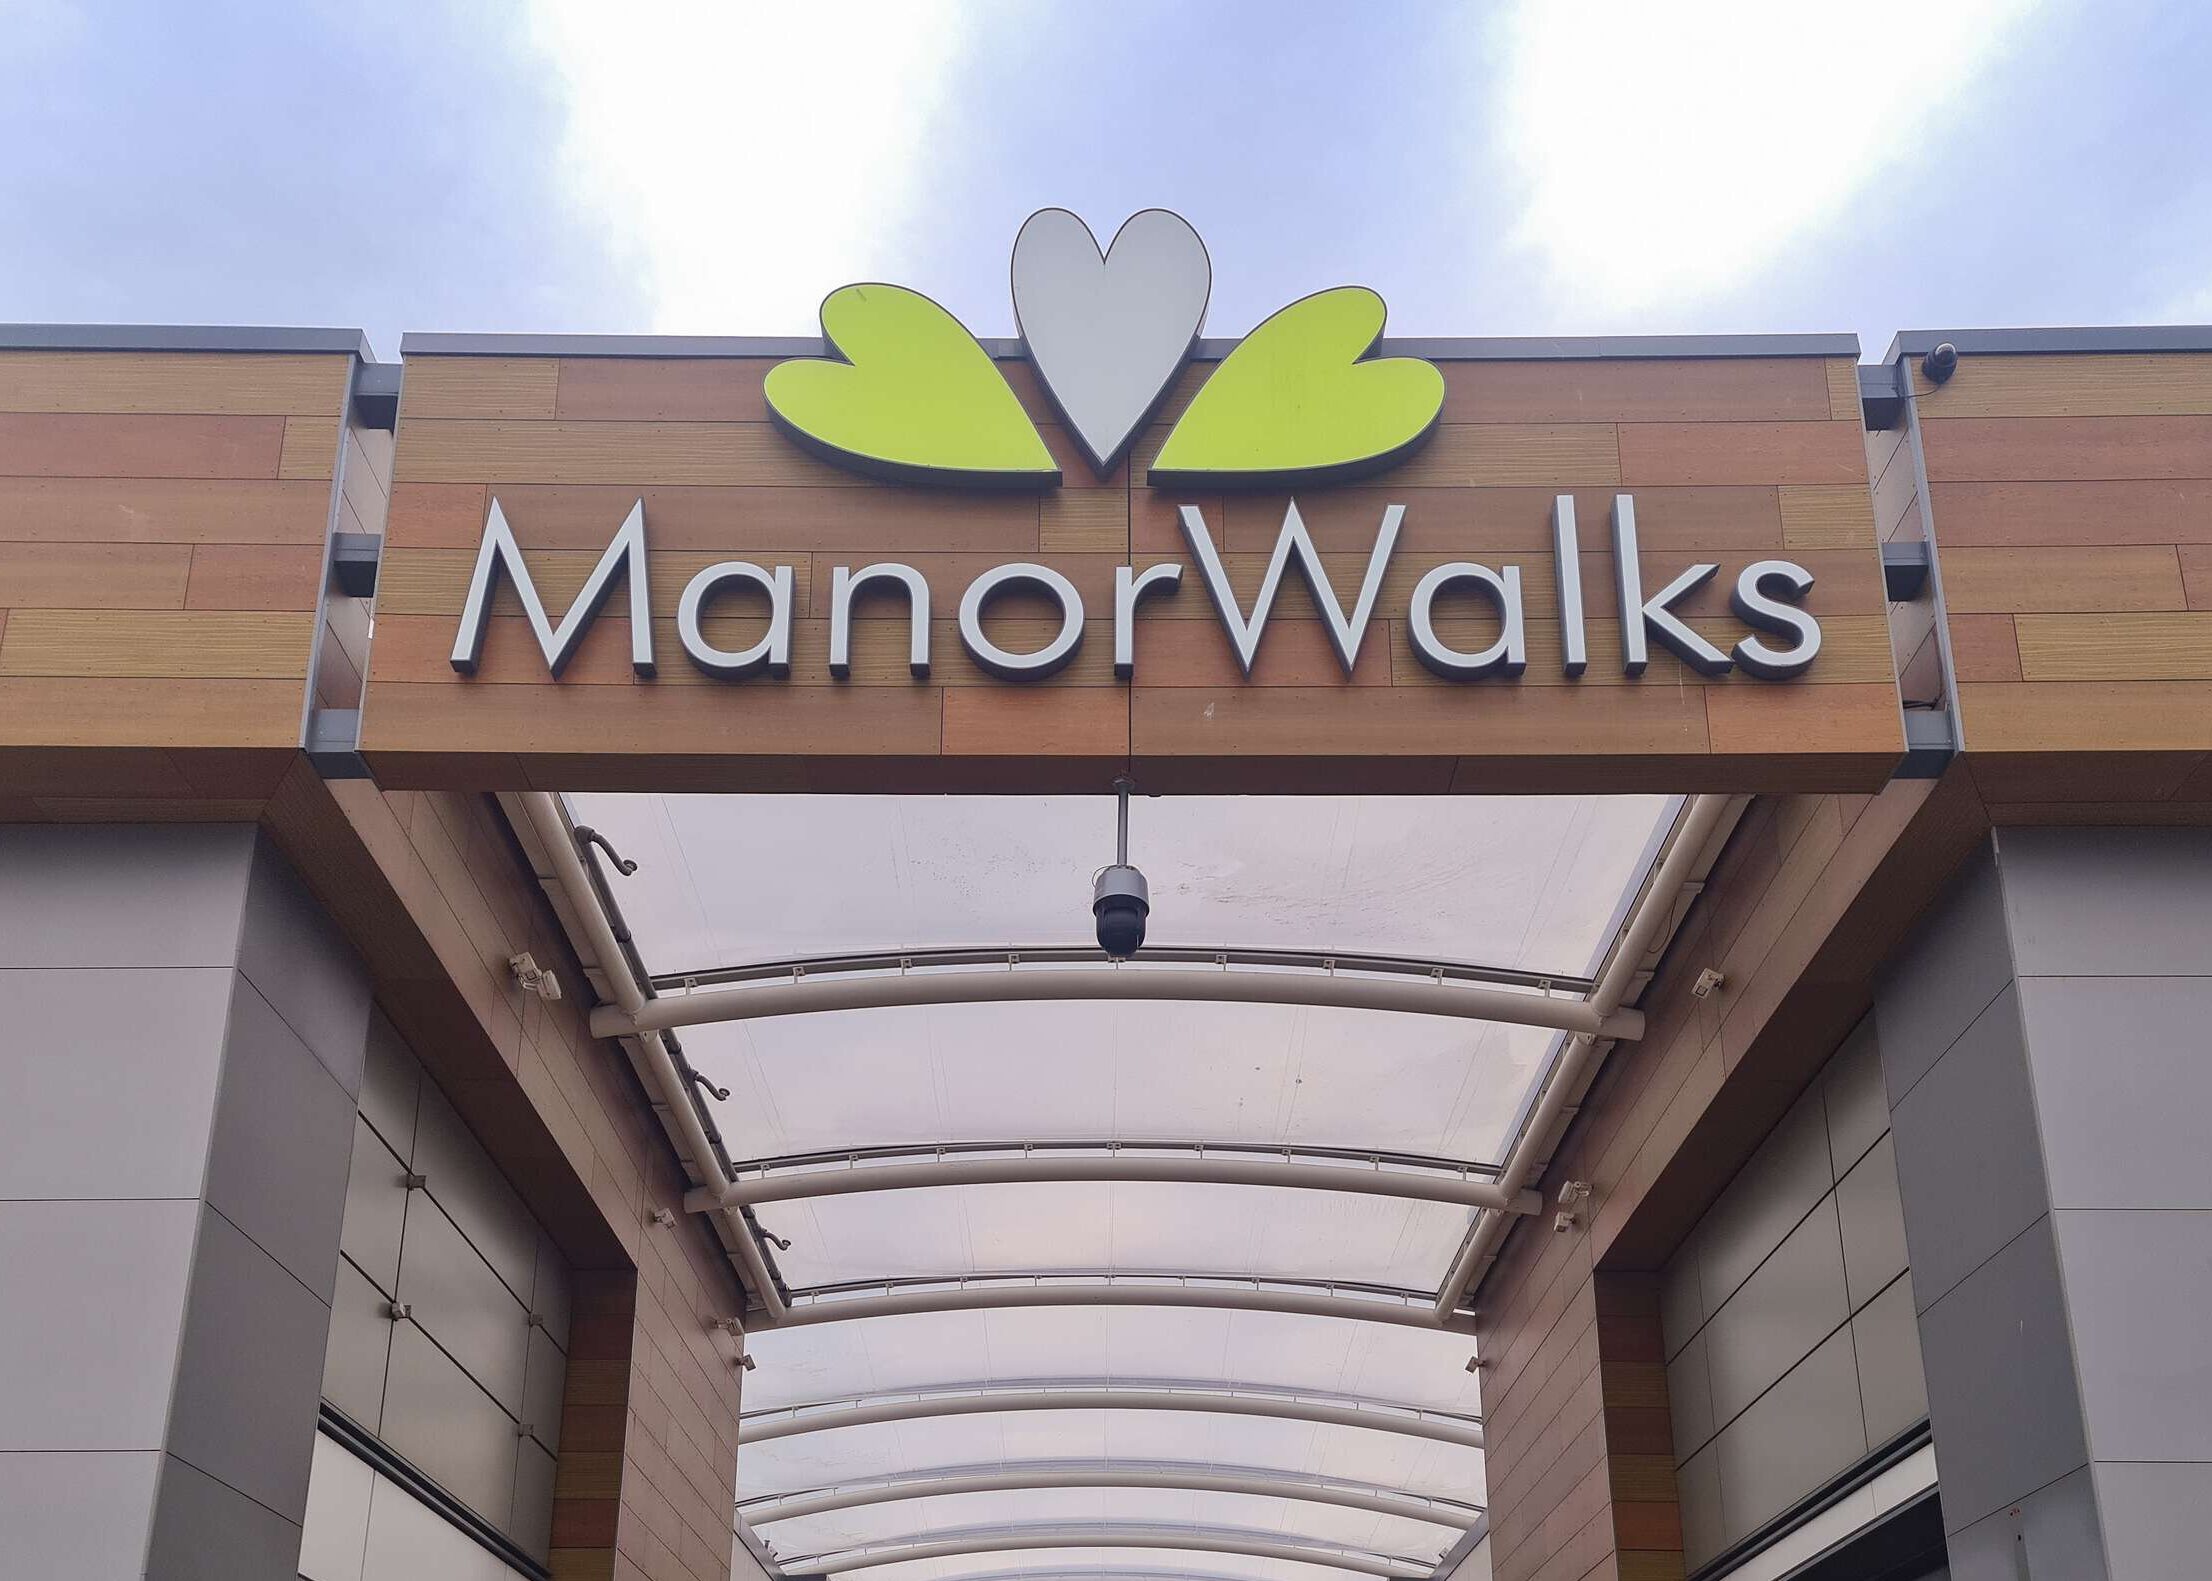 Manor Walks